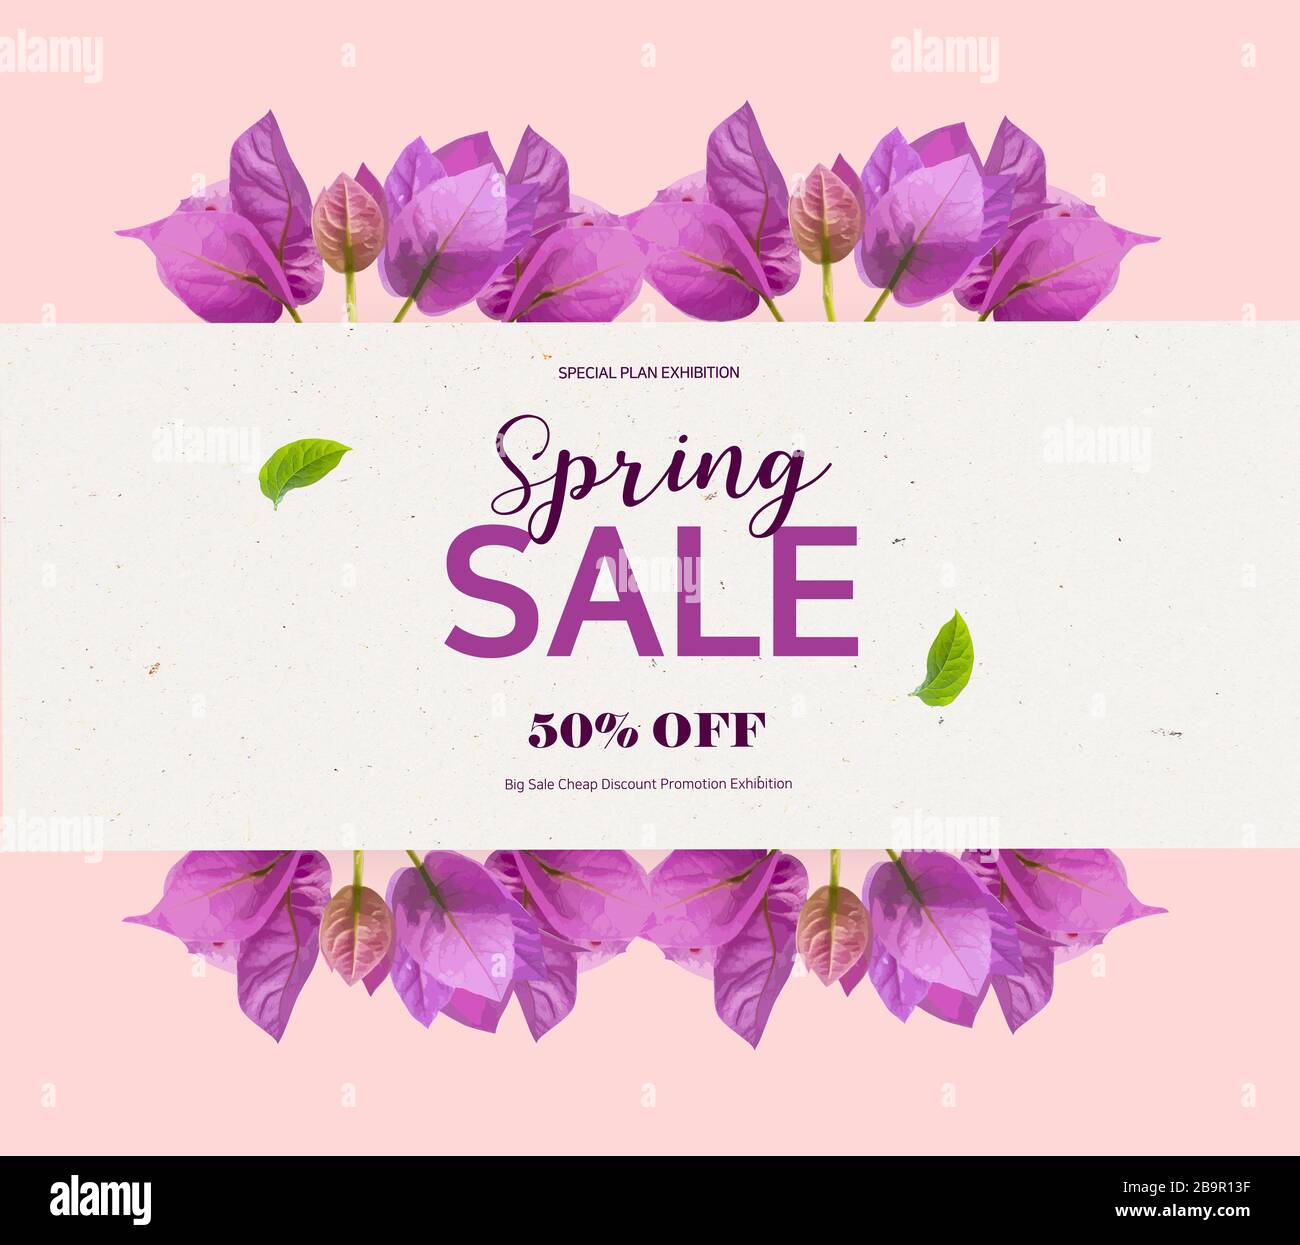 Spring flower atmosphere design Stock Photo